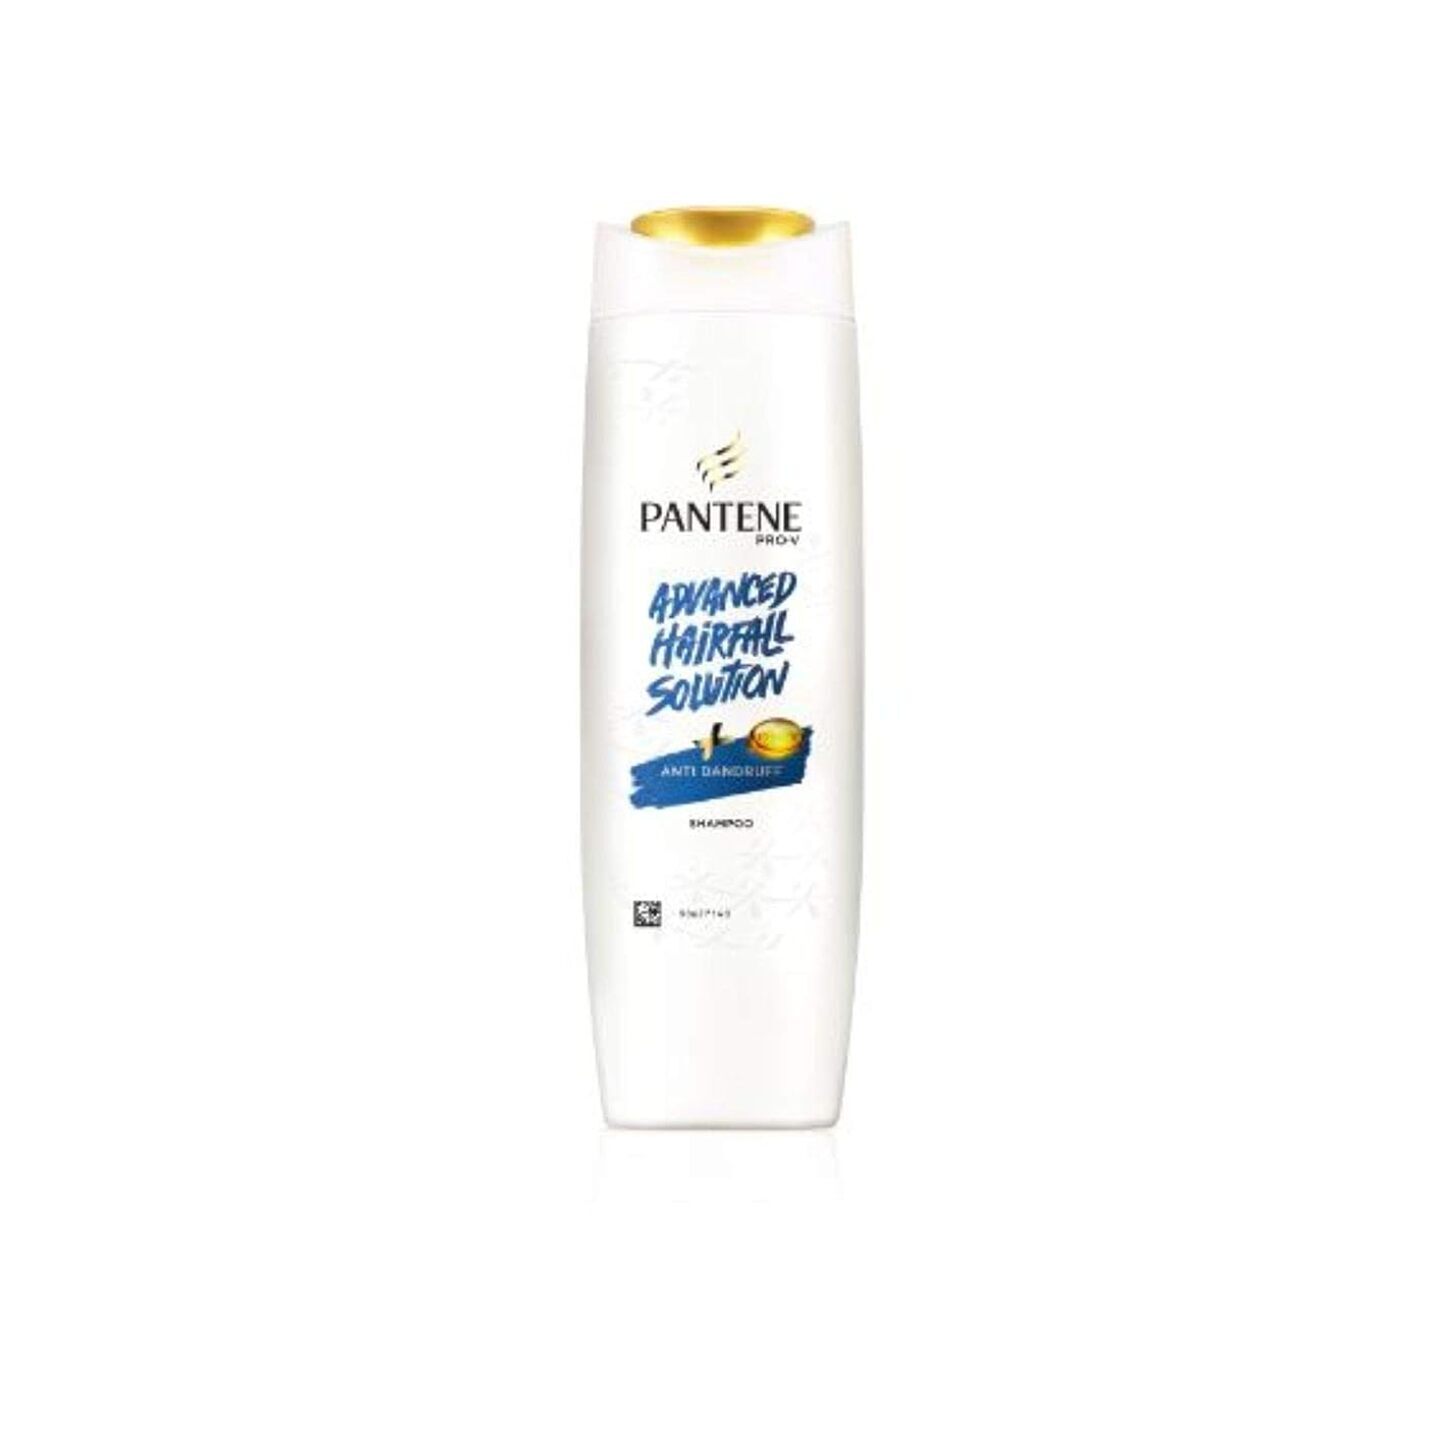 Pantene Advanced Hair Fall Solution Anti-Dandruff Shampoo for Women, 180 ml